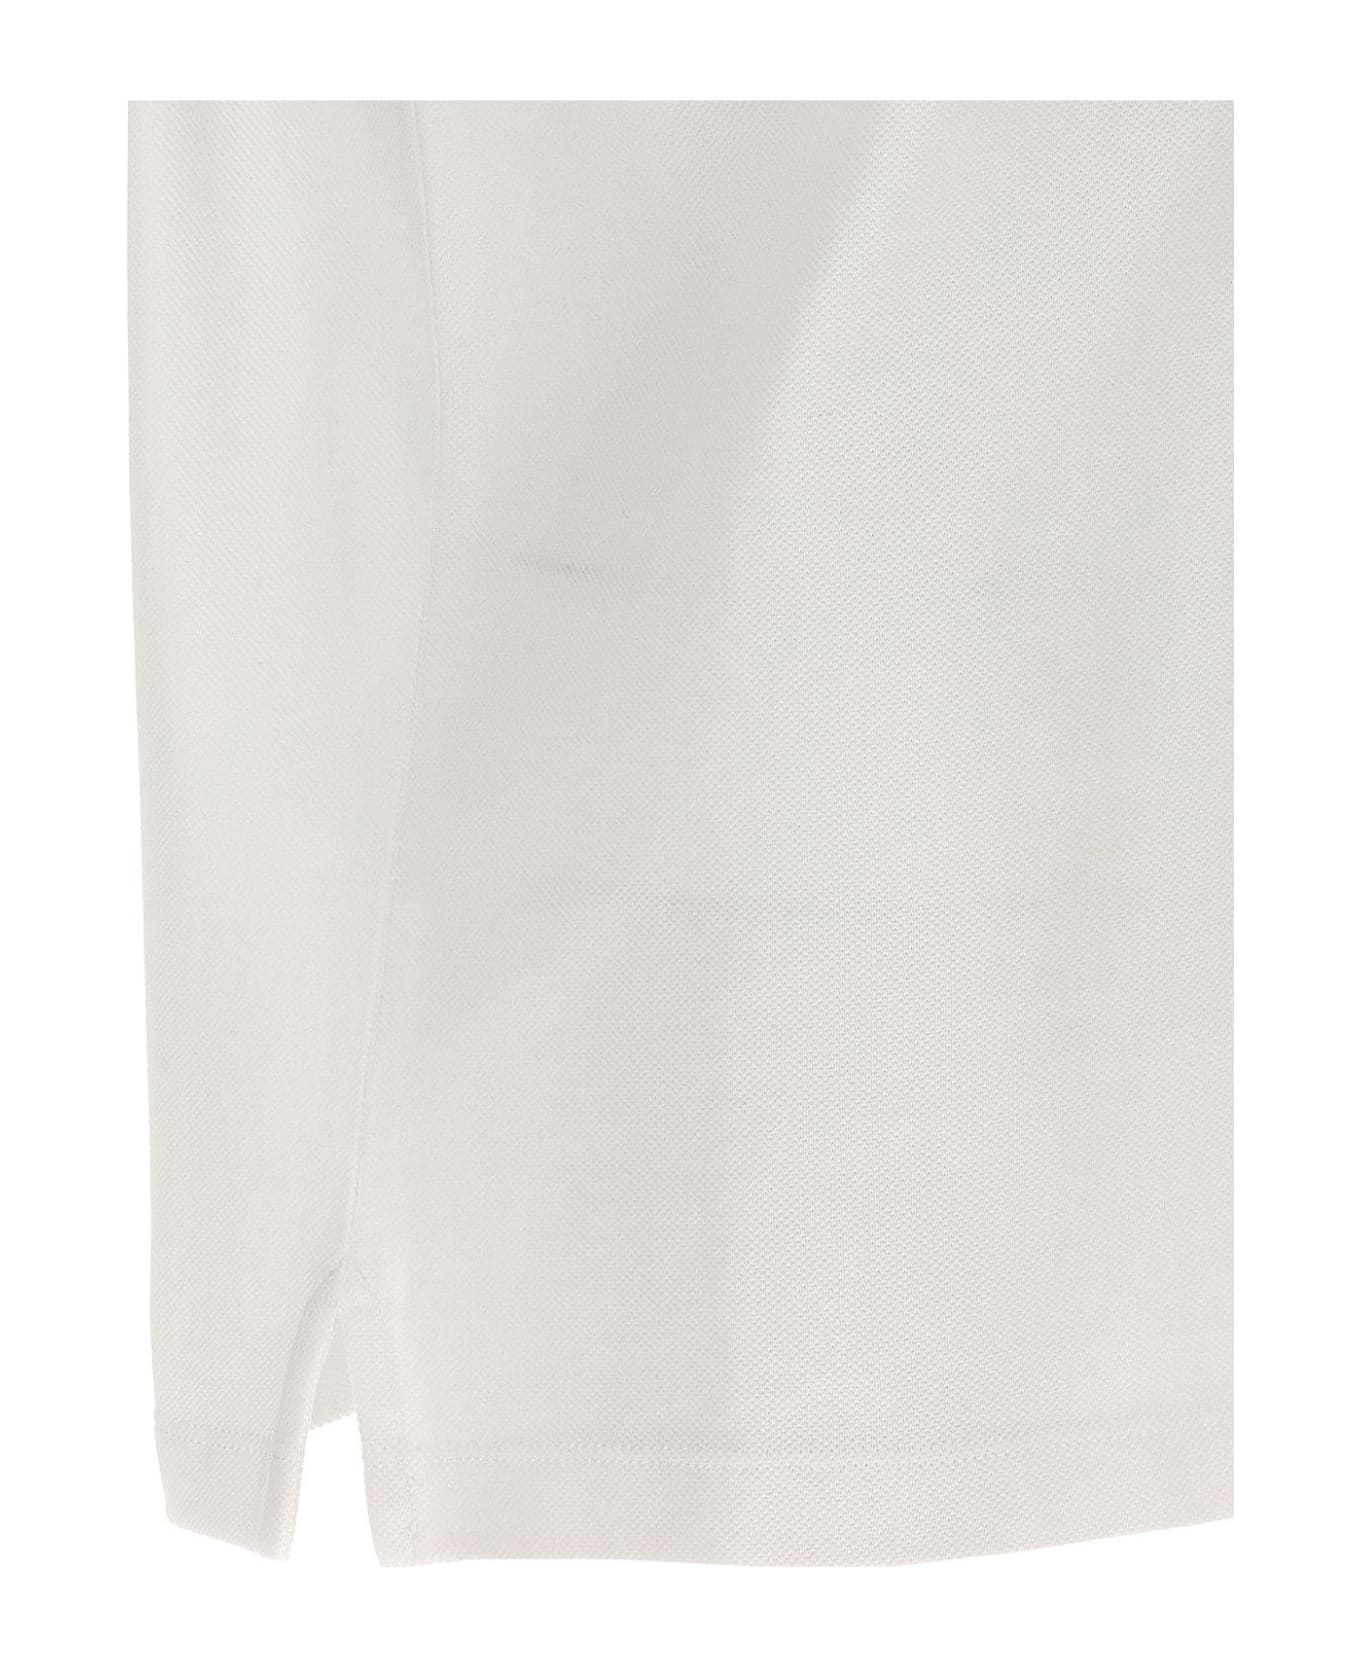 Bally Logo Embroidered Short-sleeved Polo Shirt - WHITE シャツ